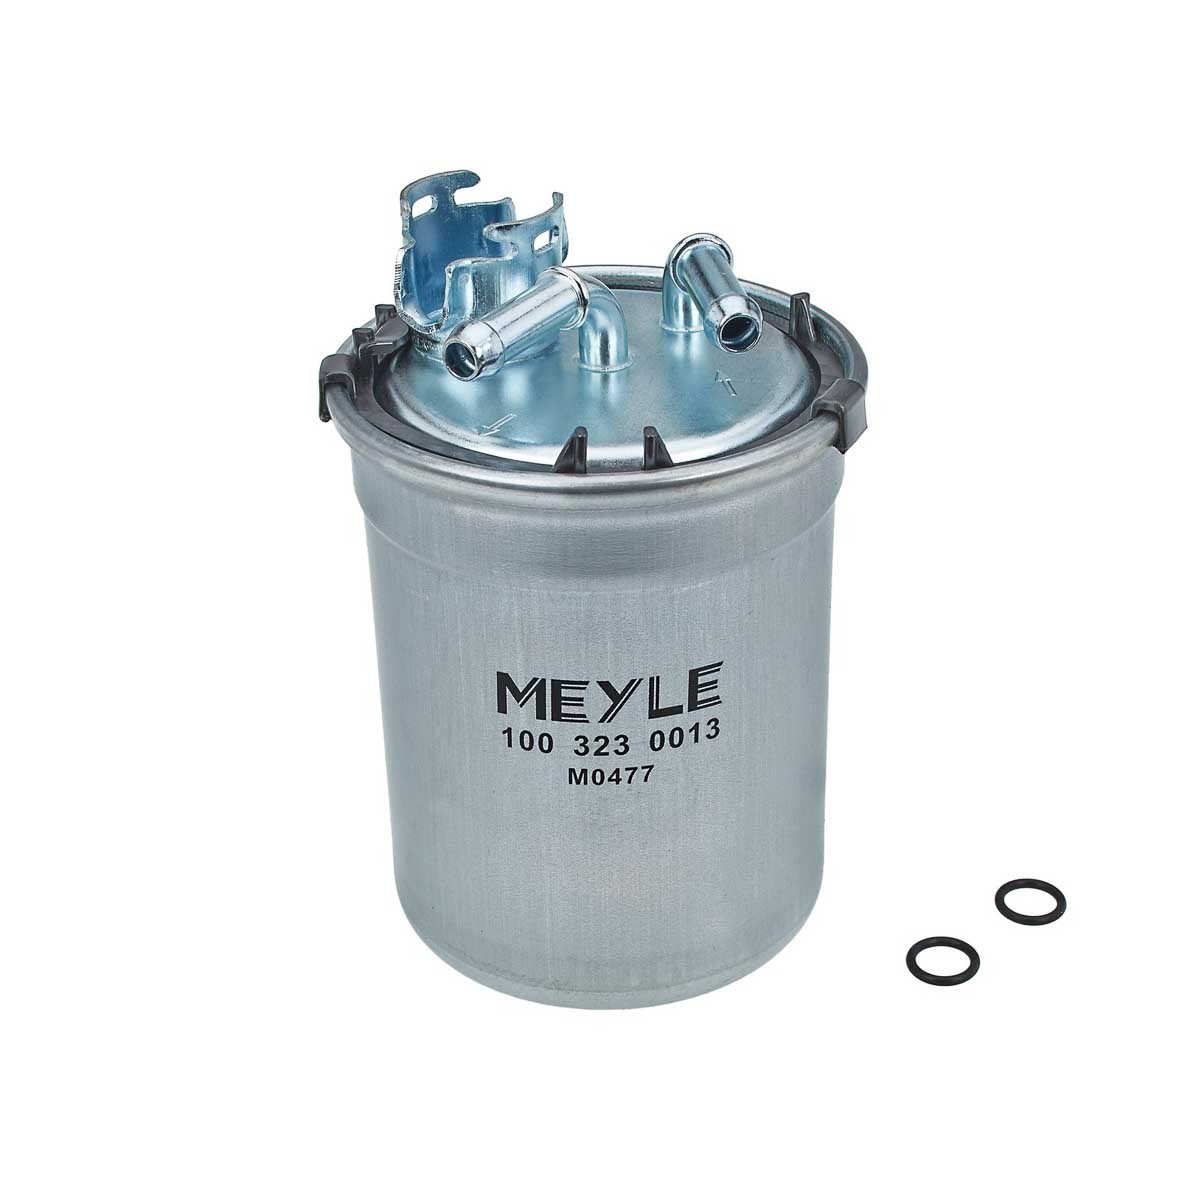 Original 100 323 0013 MEYLE Fuel filter VW